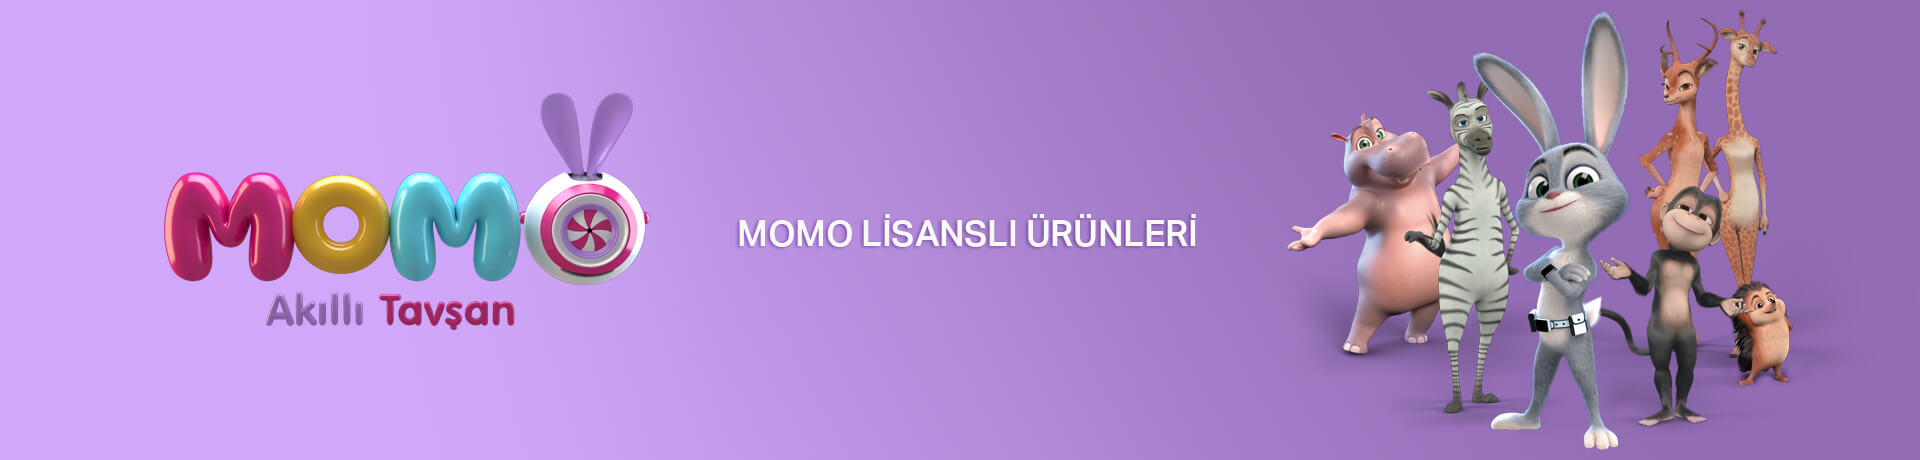 Momo-urunlerbanner-YENI (1).jpg (60 KB)